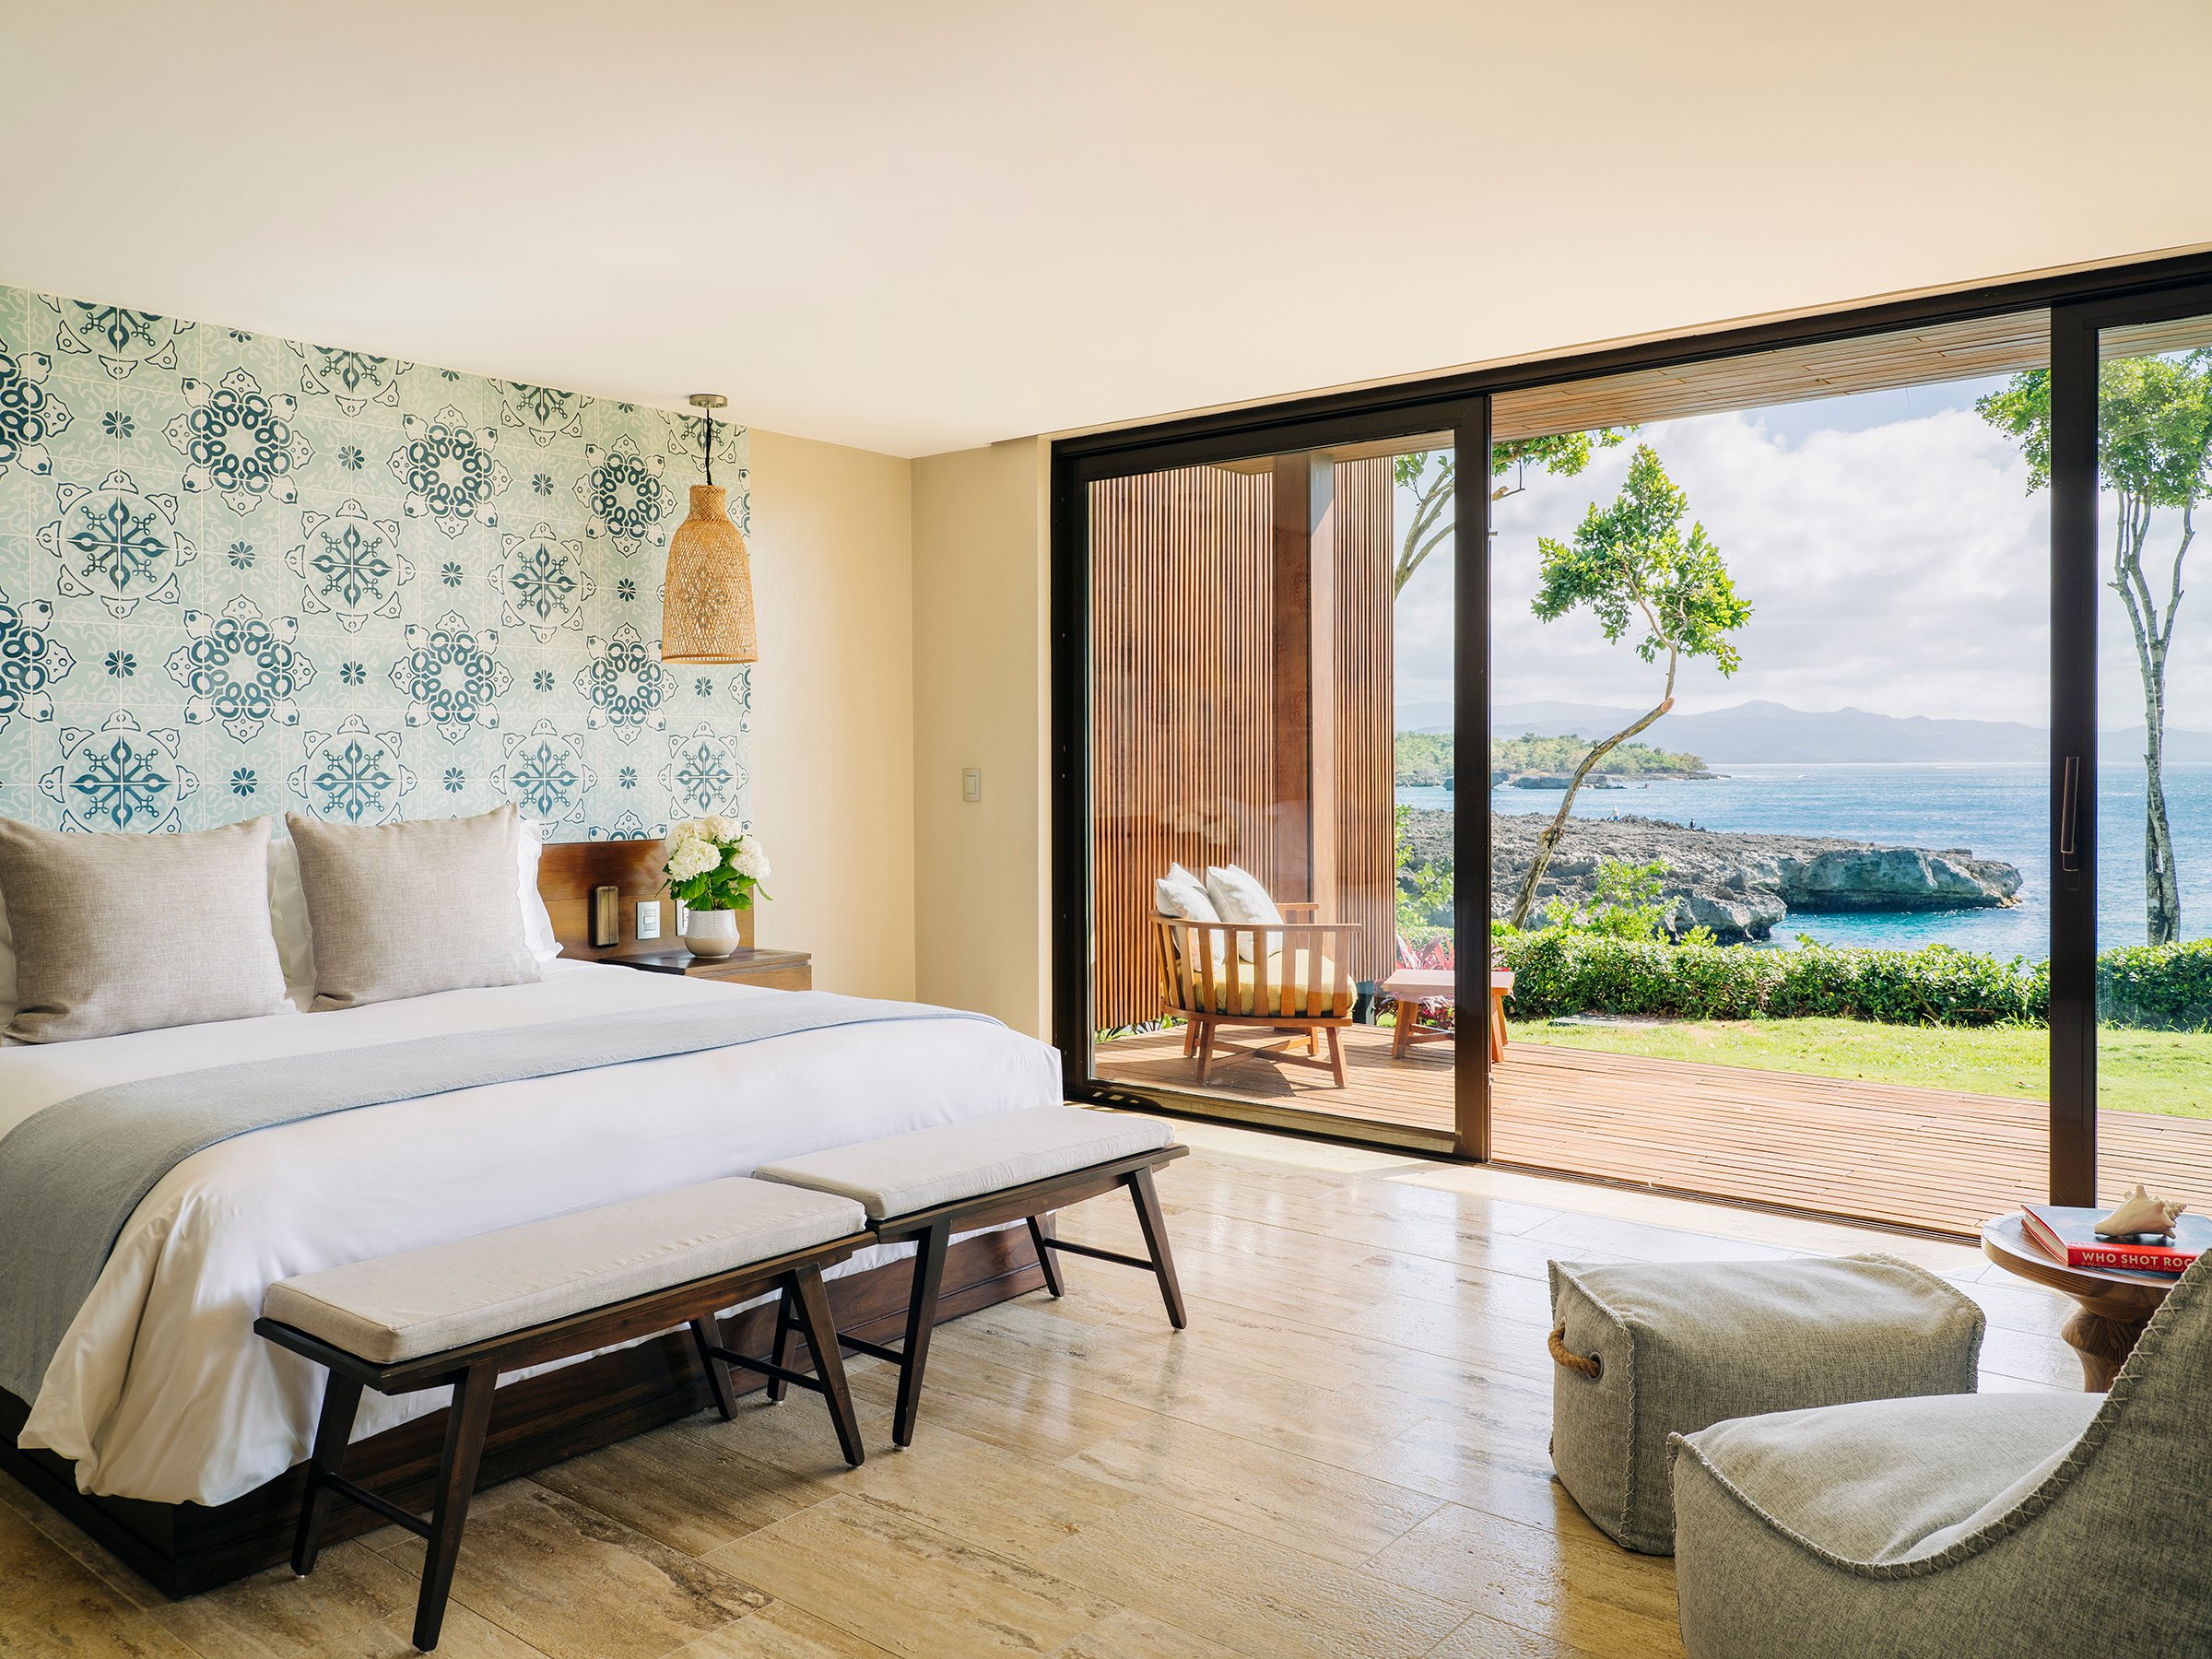 ANI Dominican Republic -Accommodation - Ocean View Junior Suite